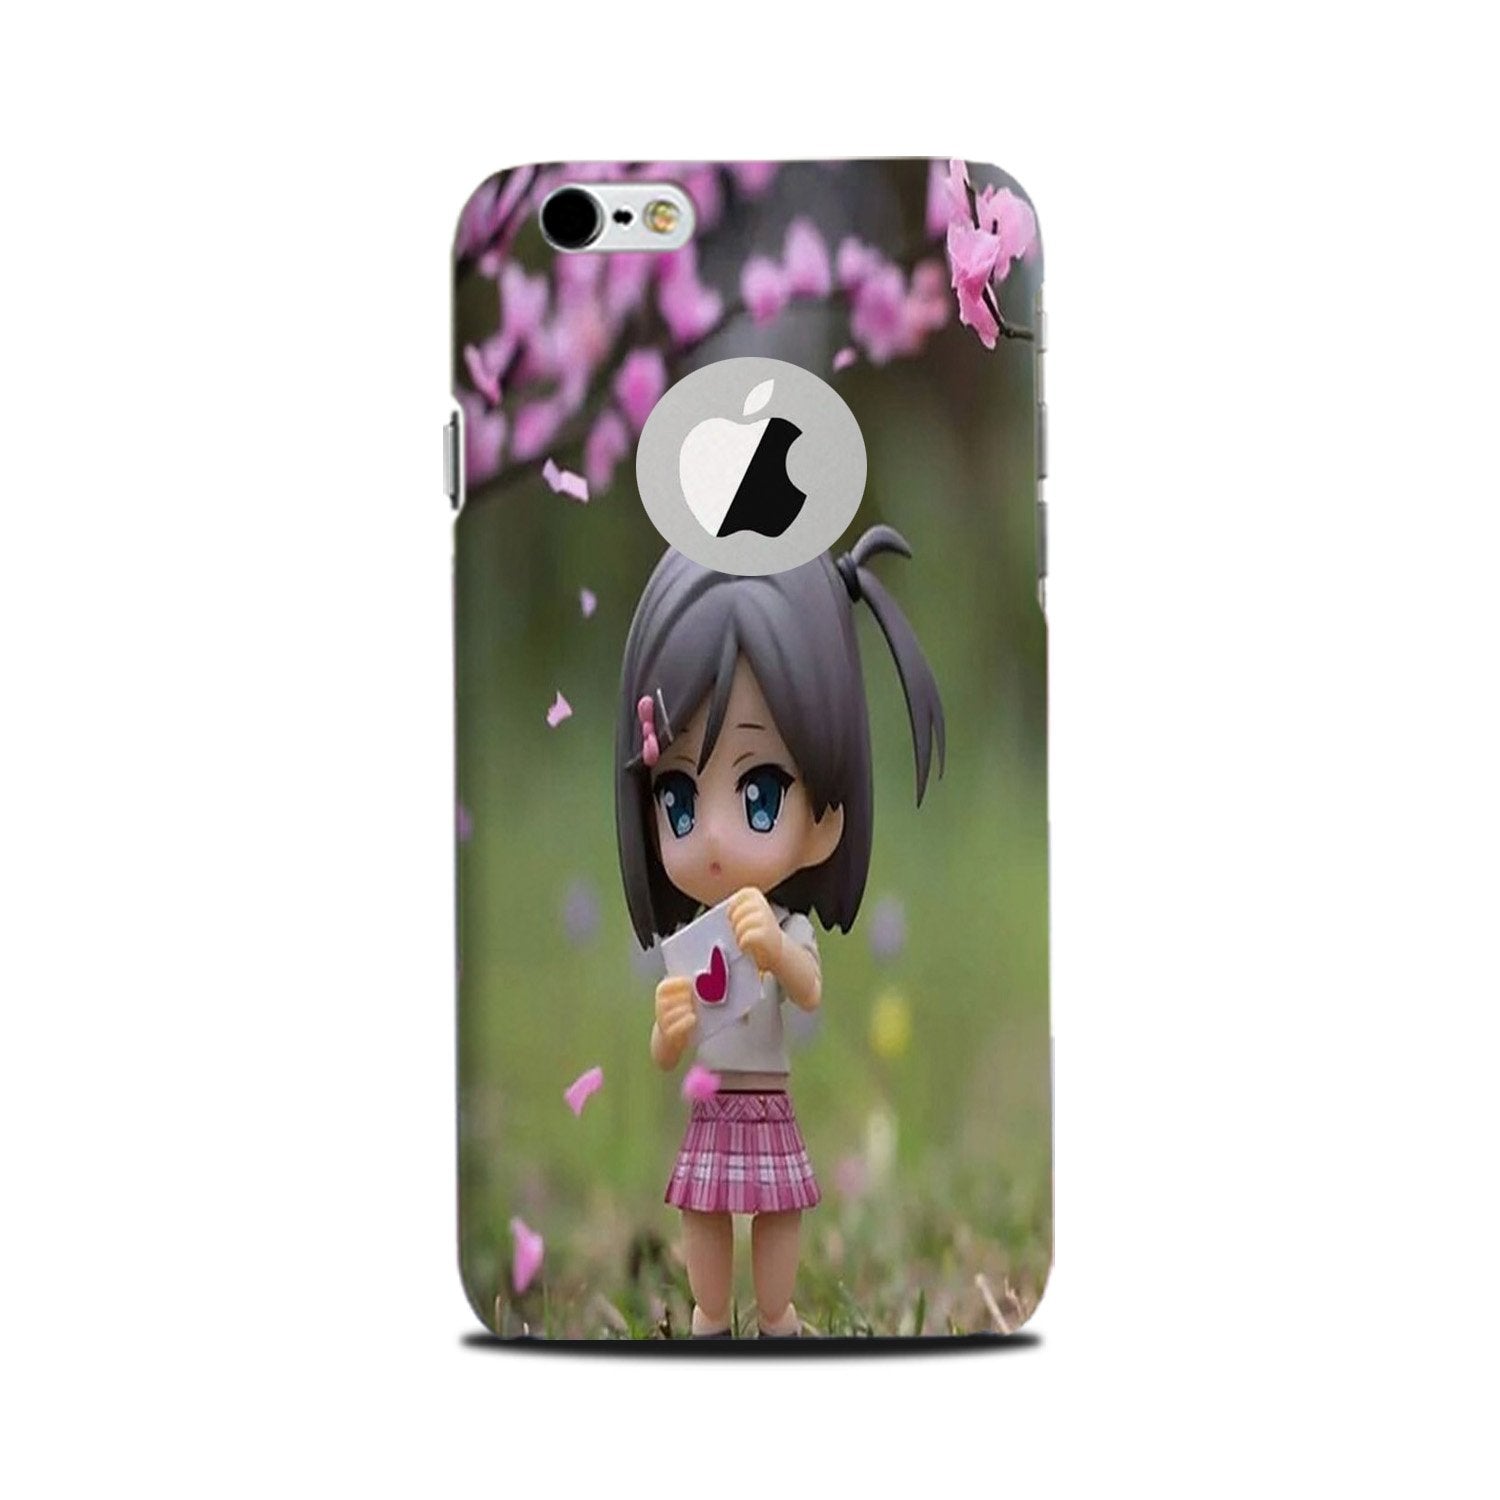 Cute Girl Case for iPhone 6 Plus / 6s Plus logo cut 